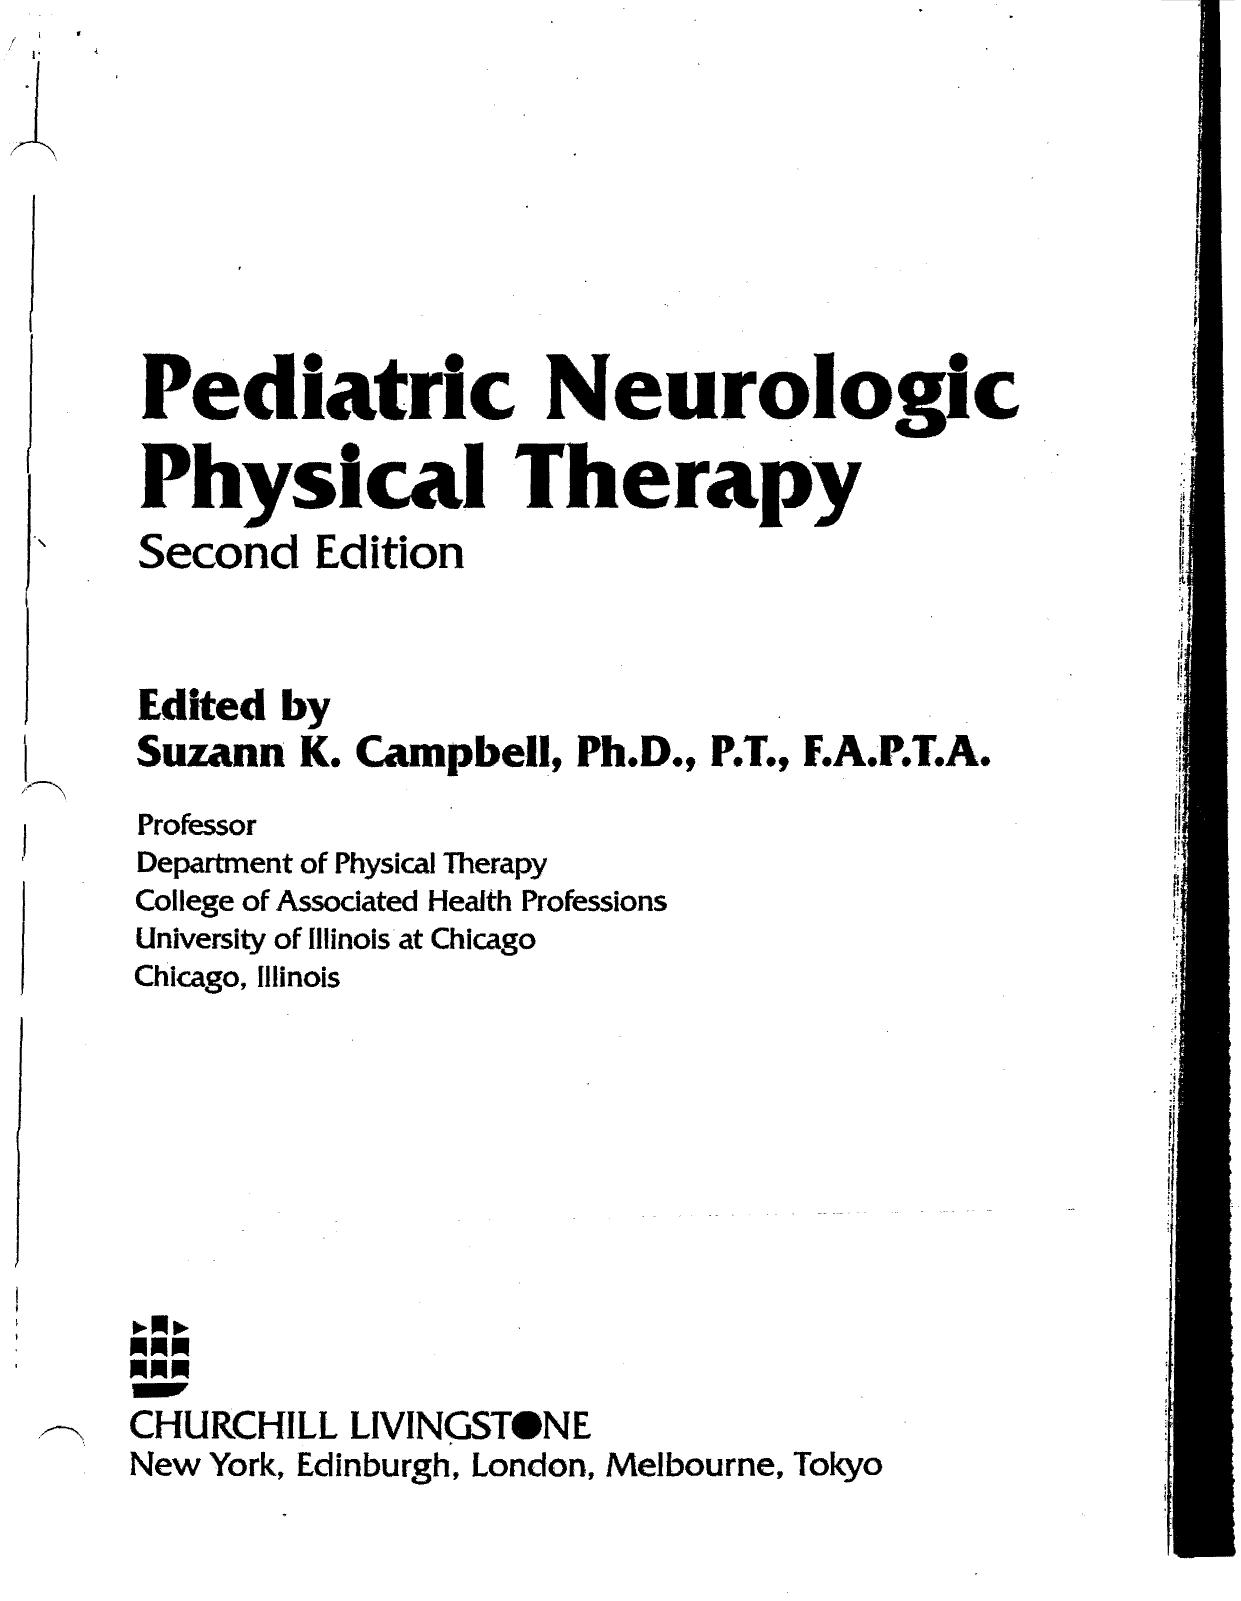 Pediatric Neurologic Physical Therapy 2nd ed